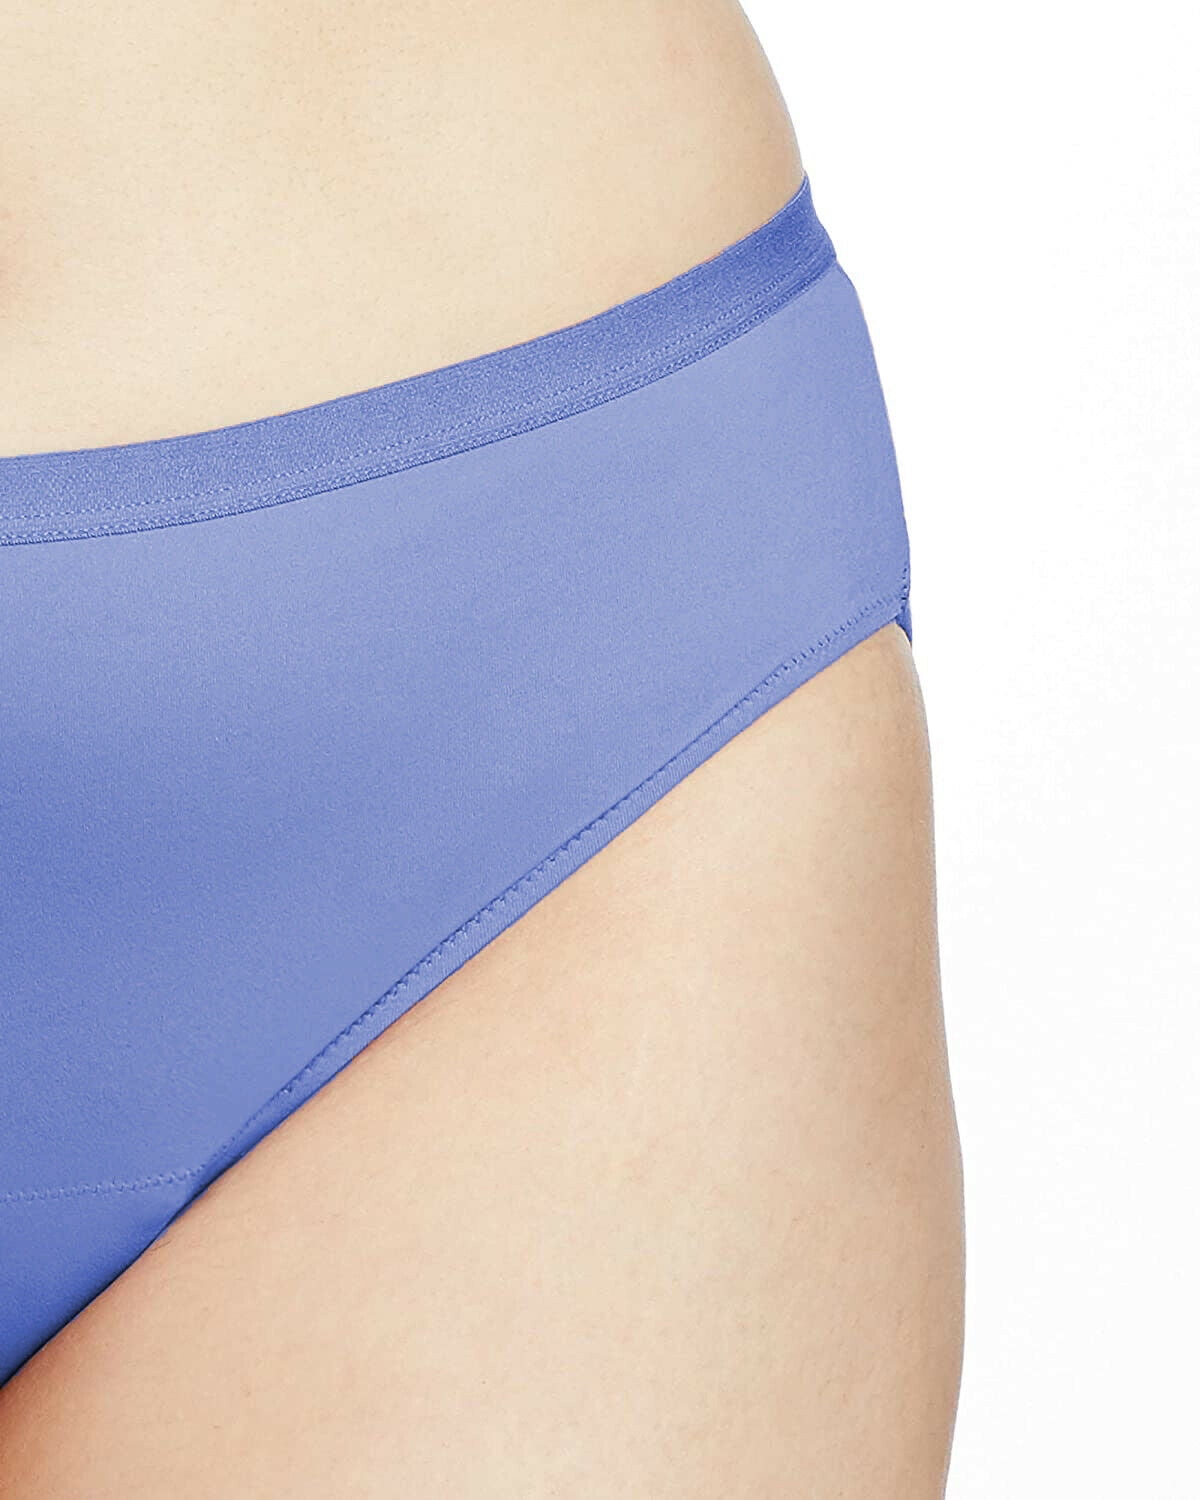 Speax Bikini Thinx Women's Underwear For Bladder Leak Protection Small 